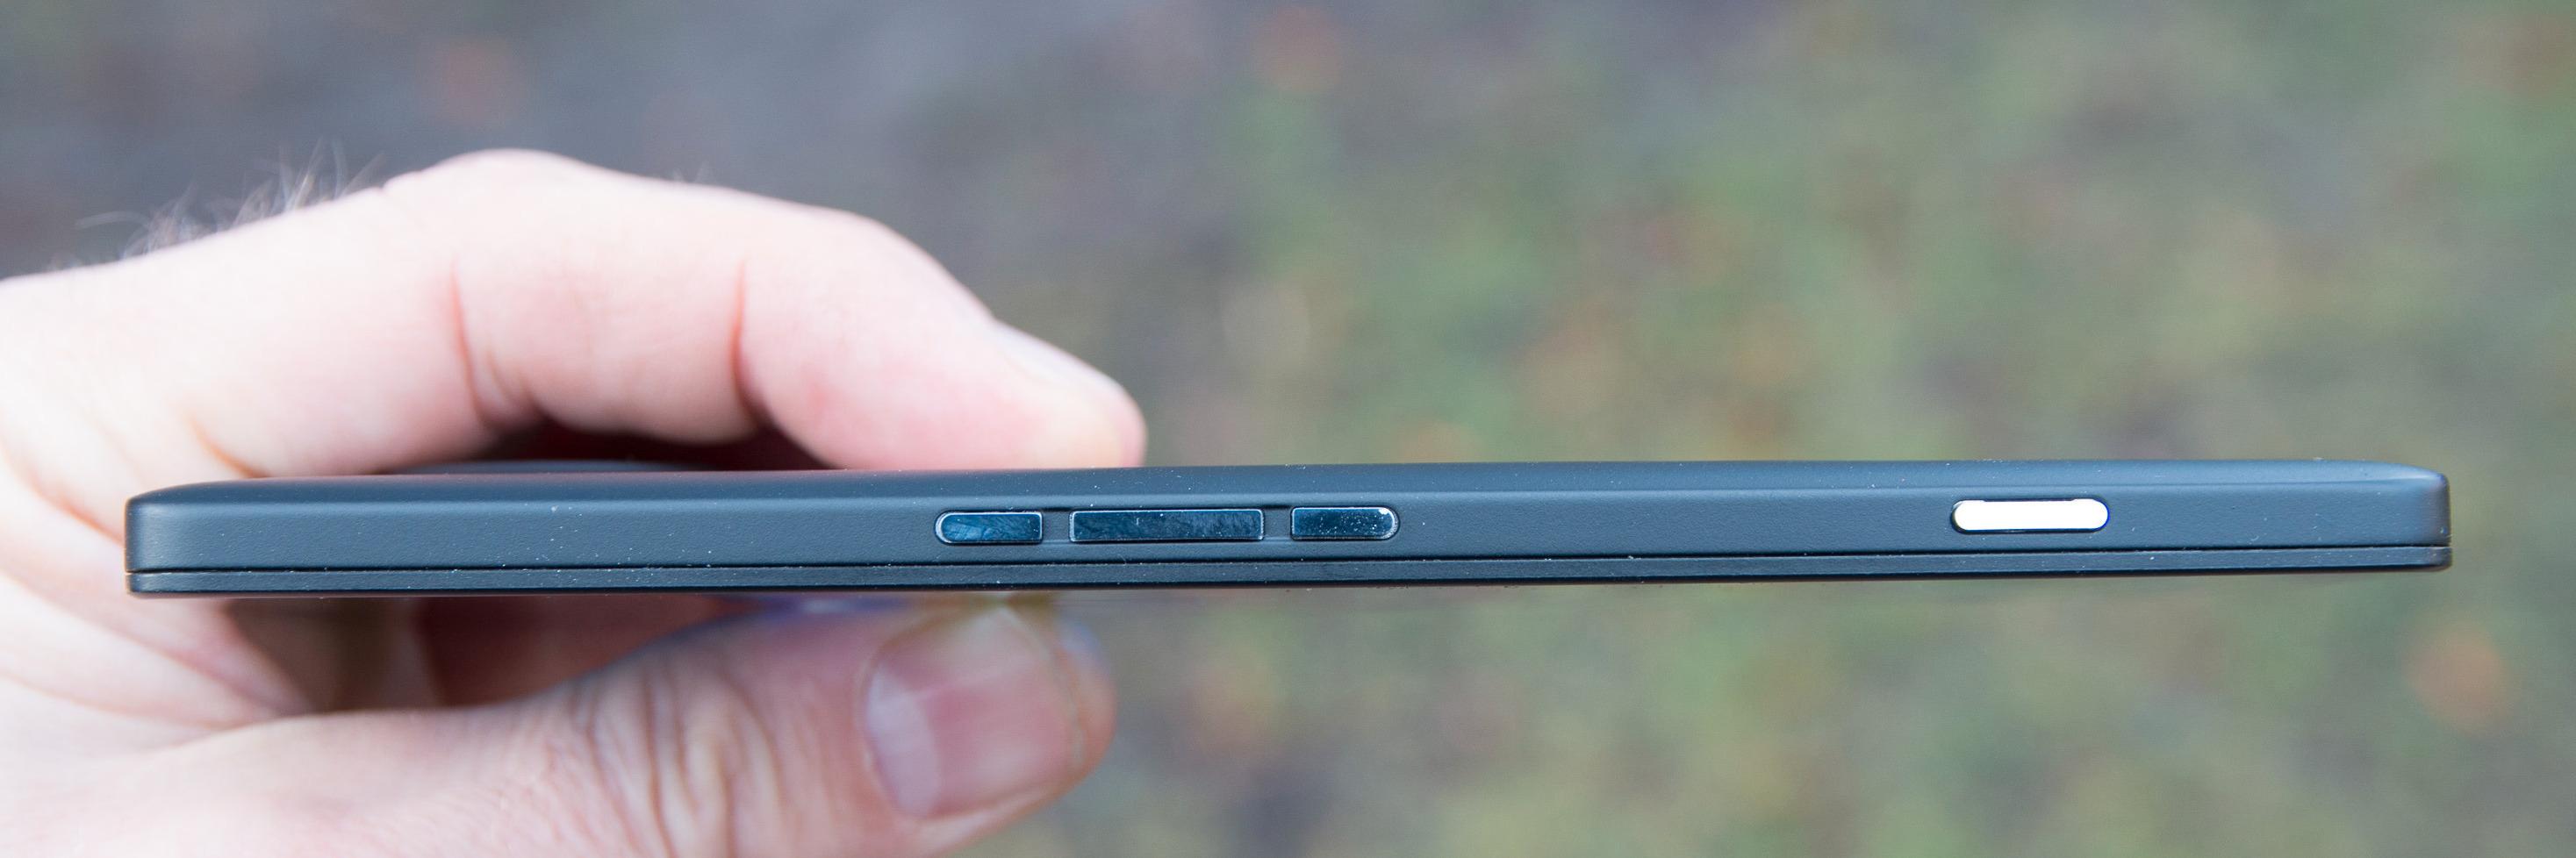 Lumia 950 XL. Foto: Kurt Lekanger, Tek.no